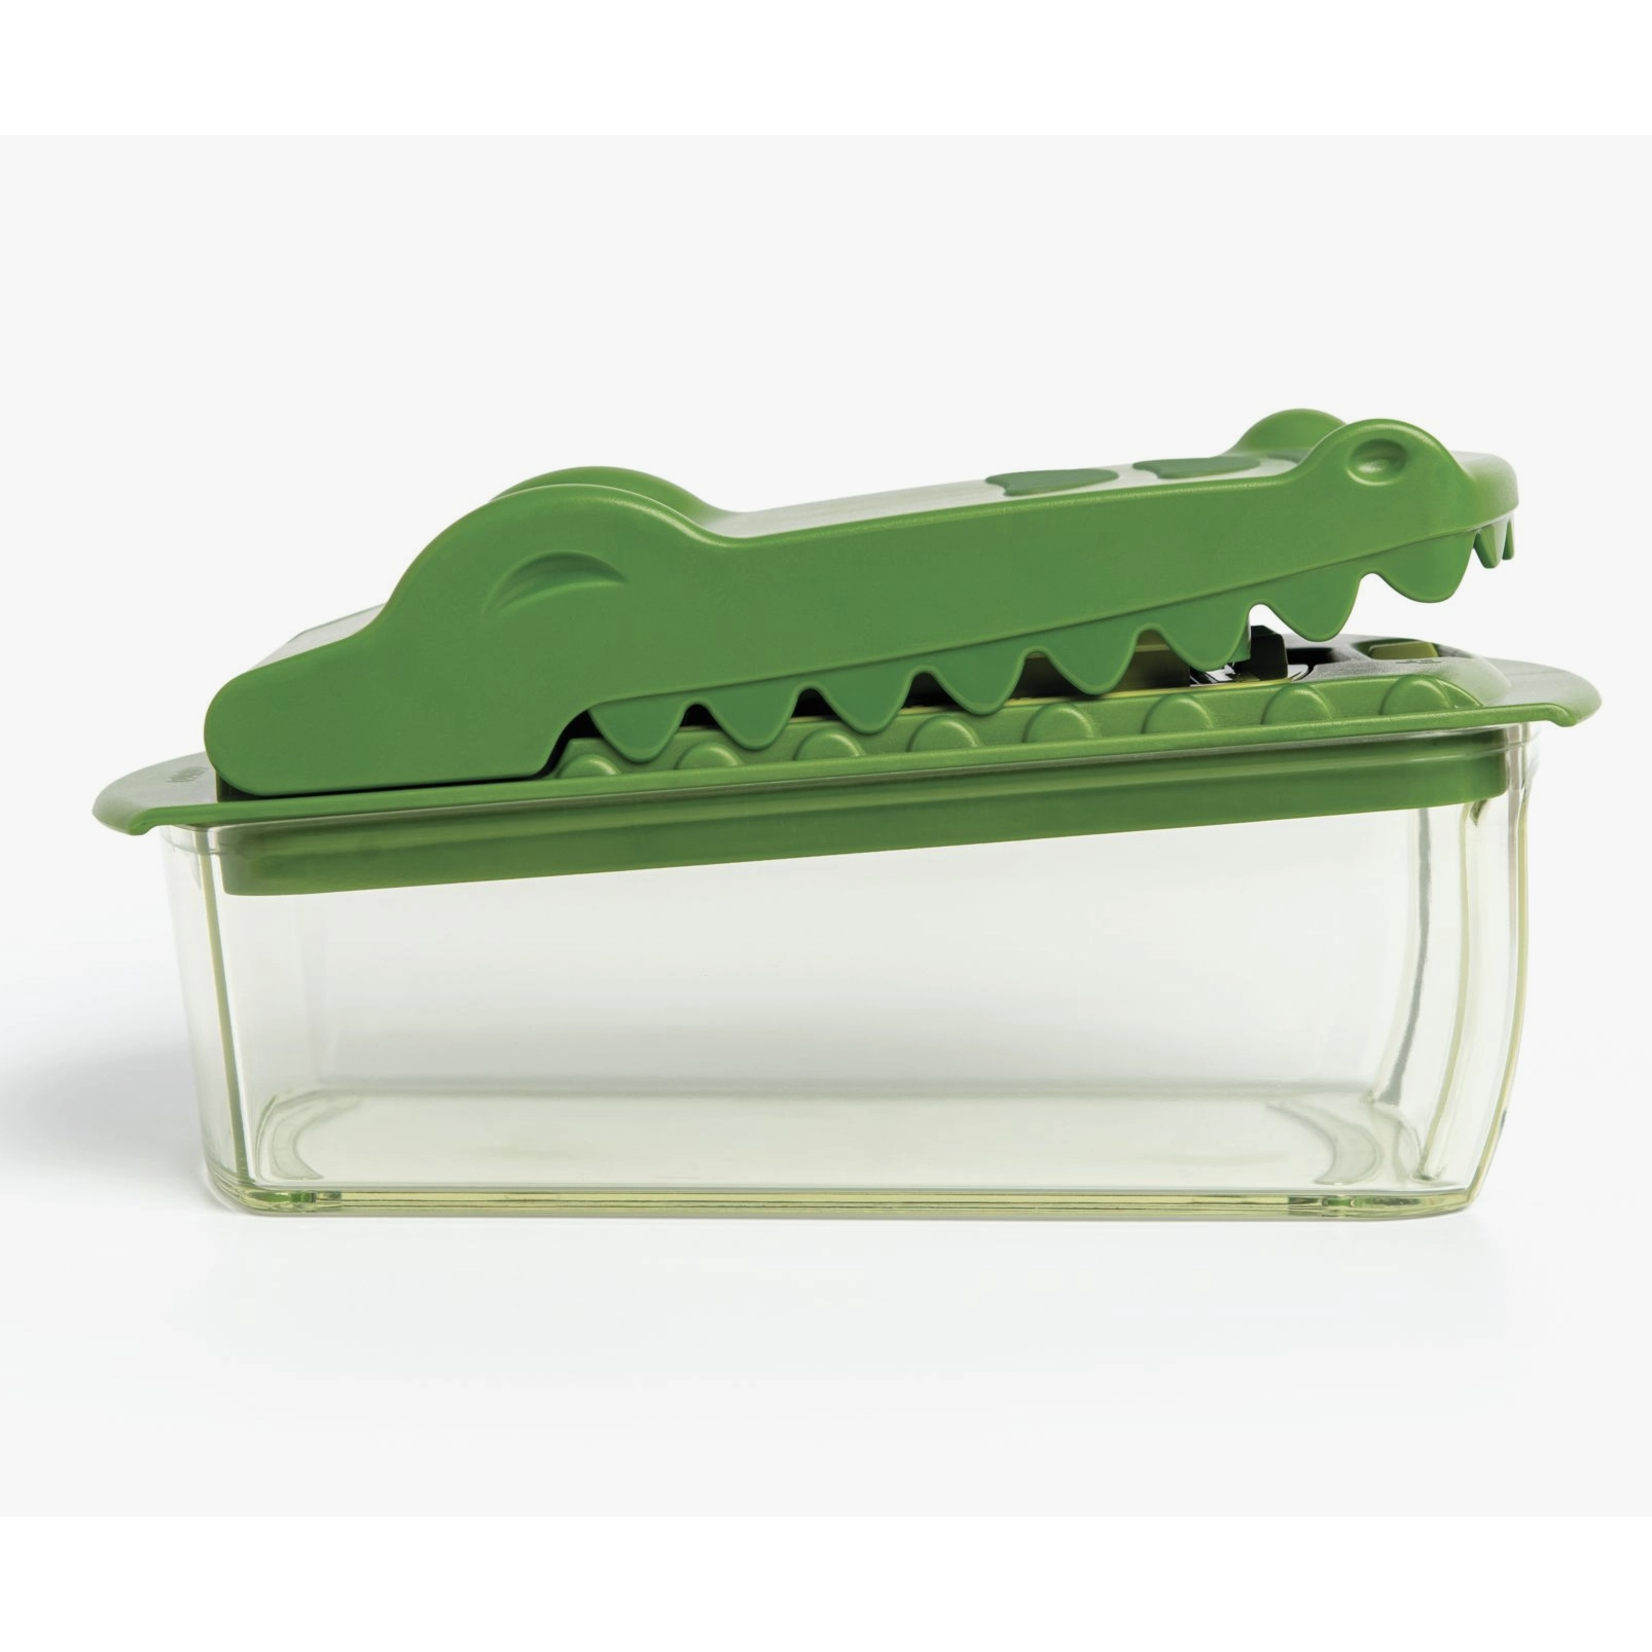 Croc Chop - Vegetable Chopper & Slicer - OTOTO – OTOTO DESIGN